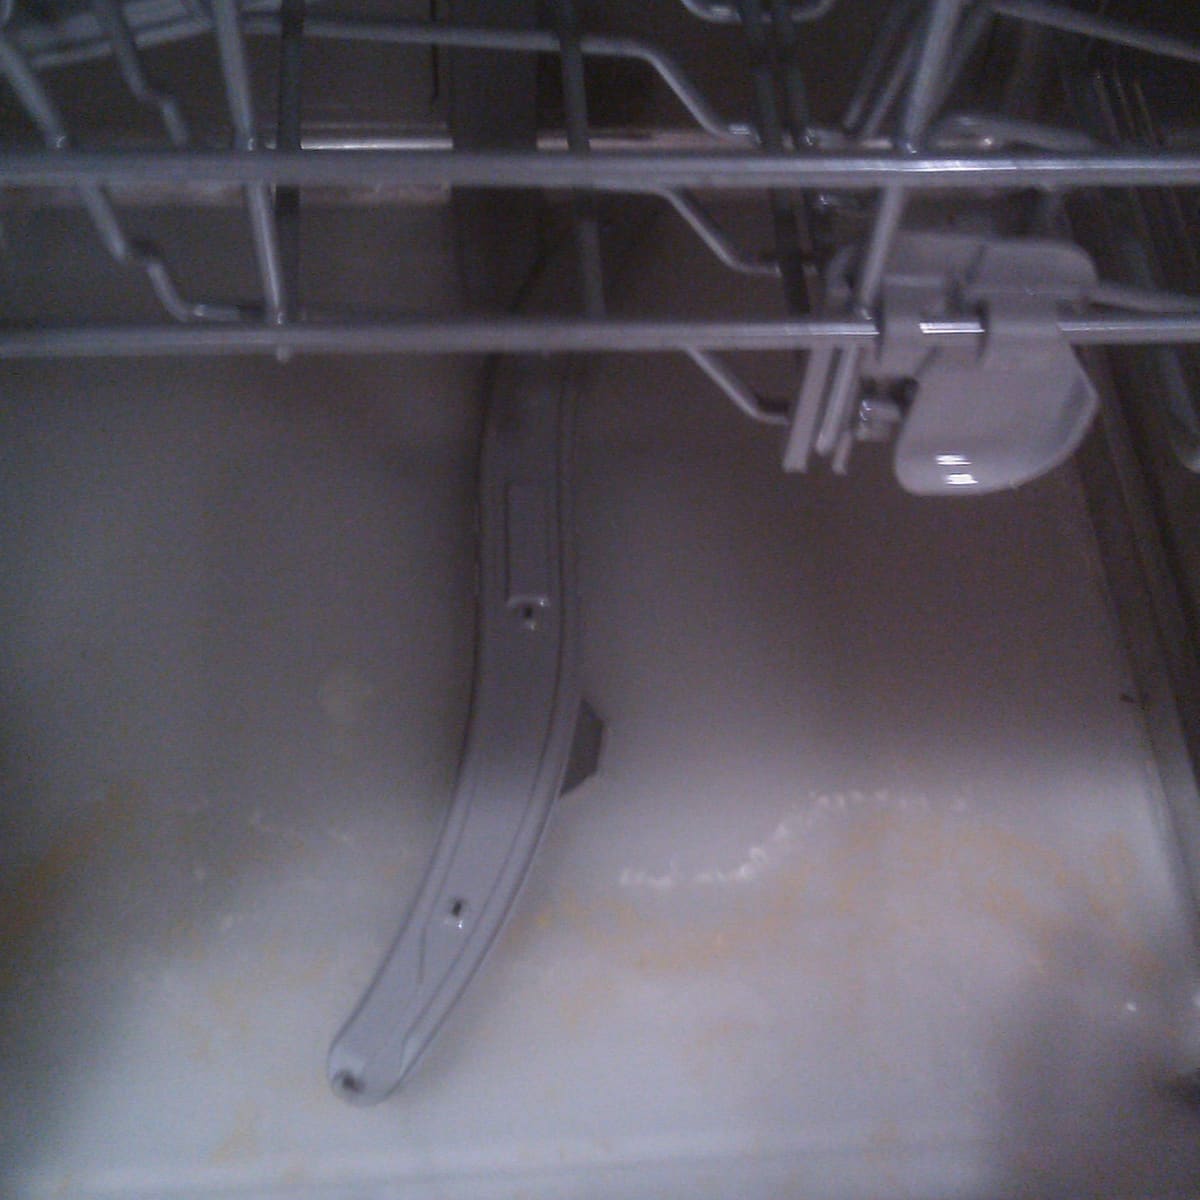 Common Dishwasher Problems